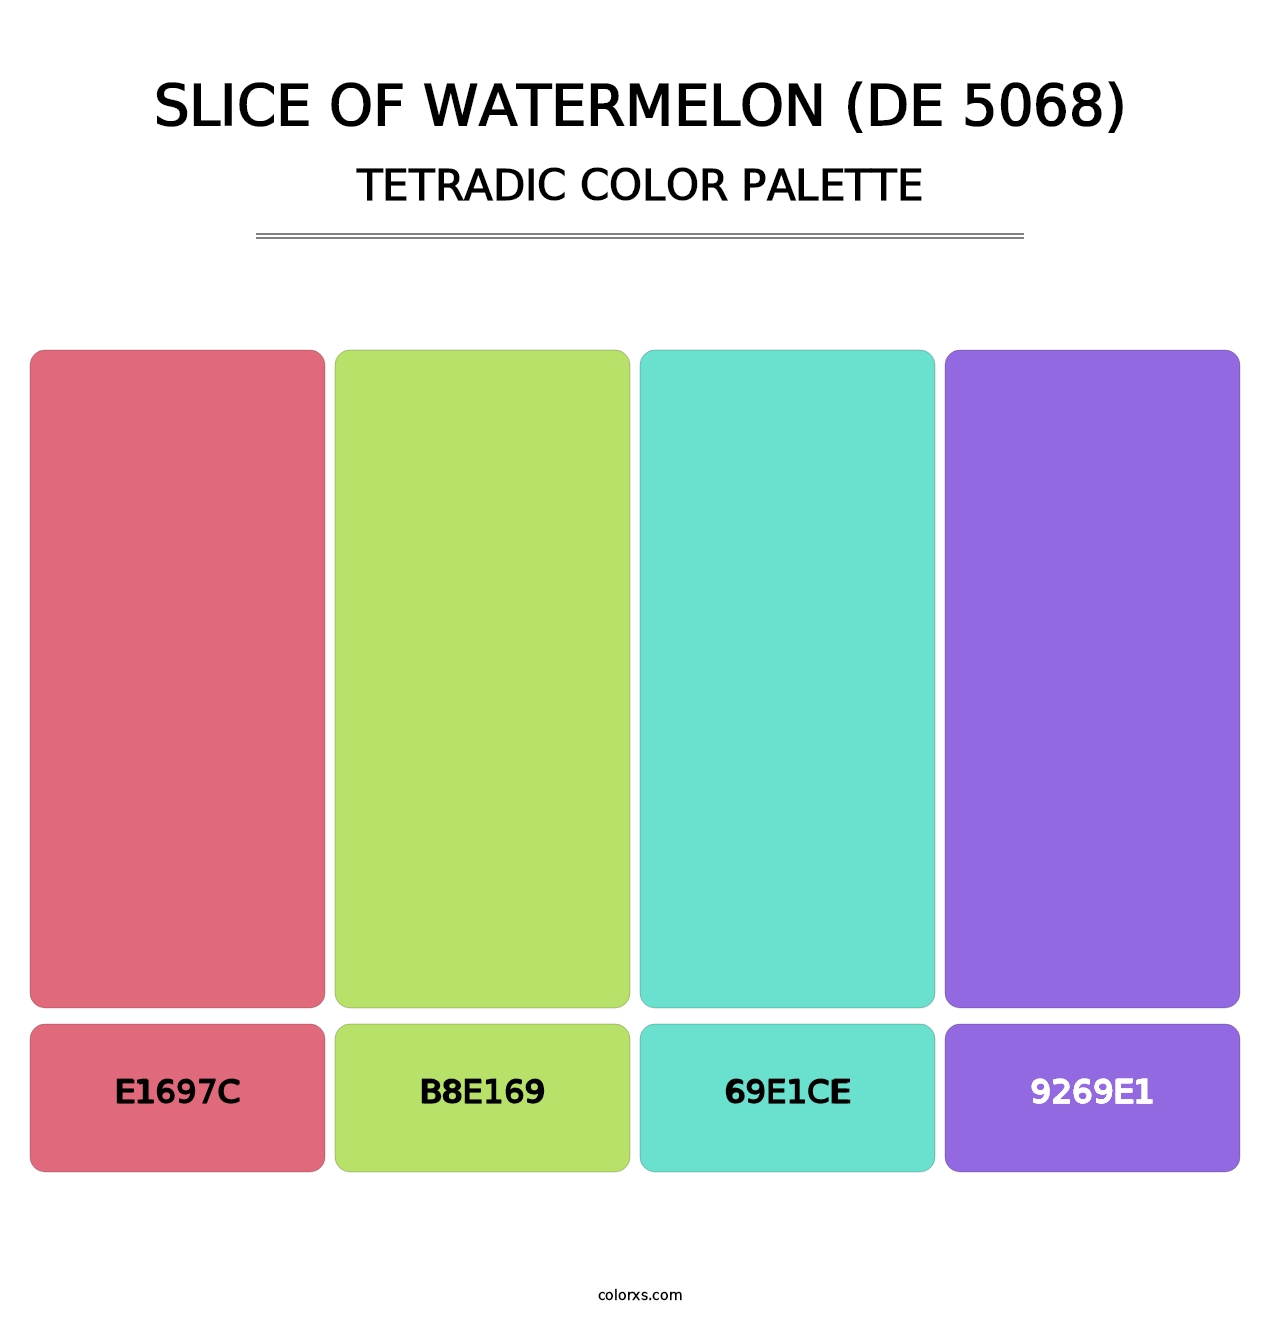 Slice of Watermelon (DE 5068) - Tetradic Color Palette